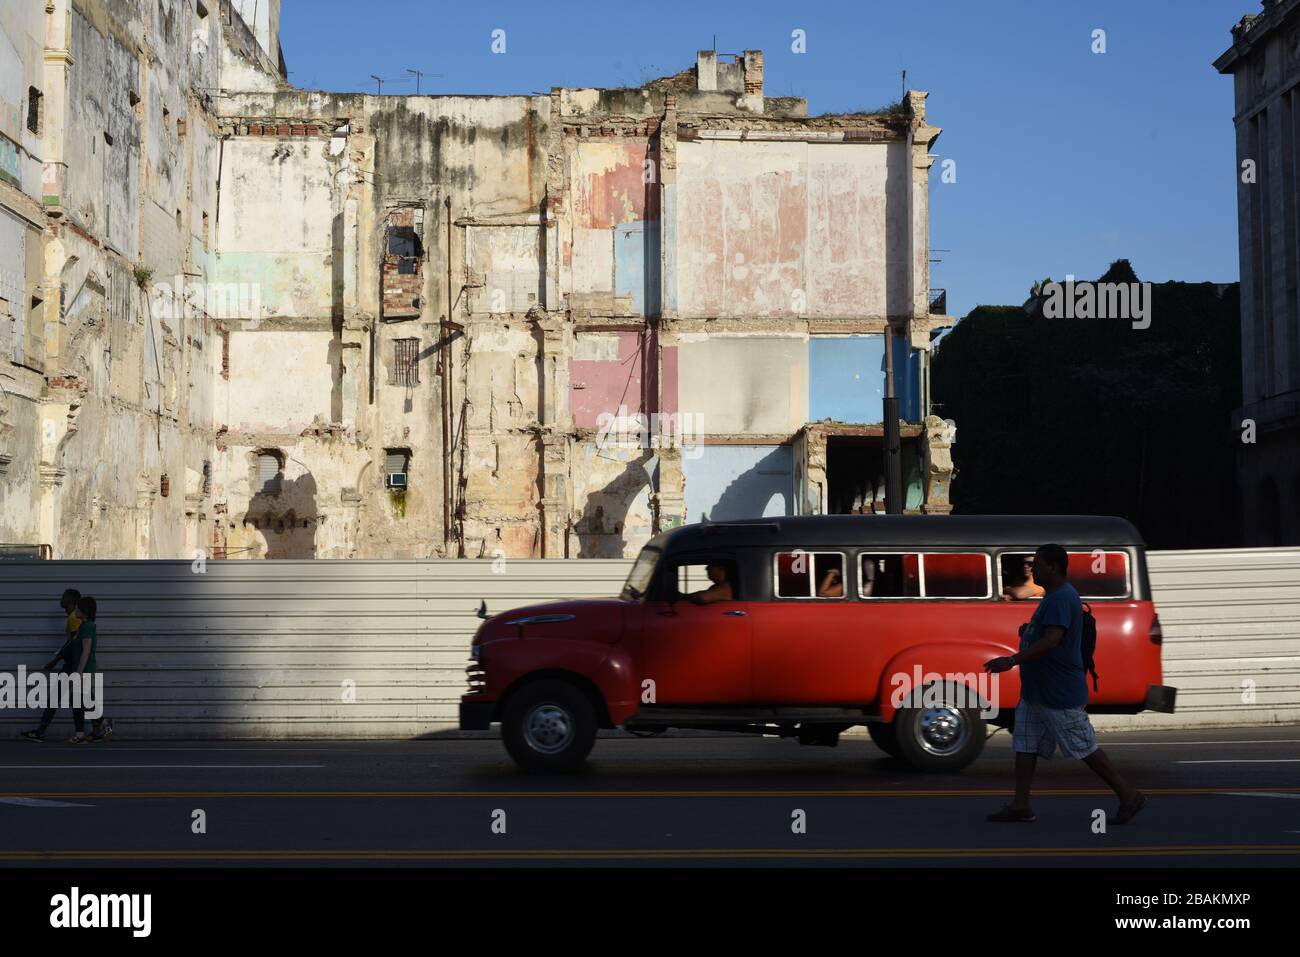 Personas, coche, edificio demolido, calle, 2014, Cuba Foto de stock